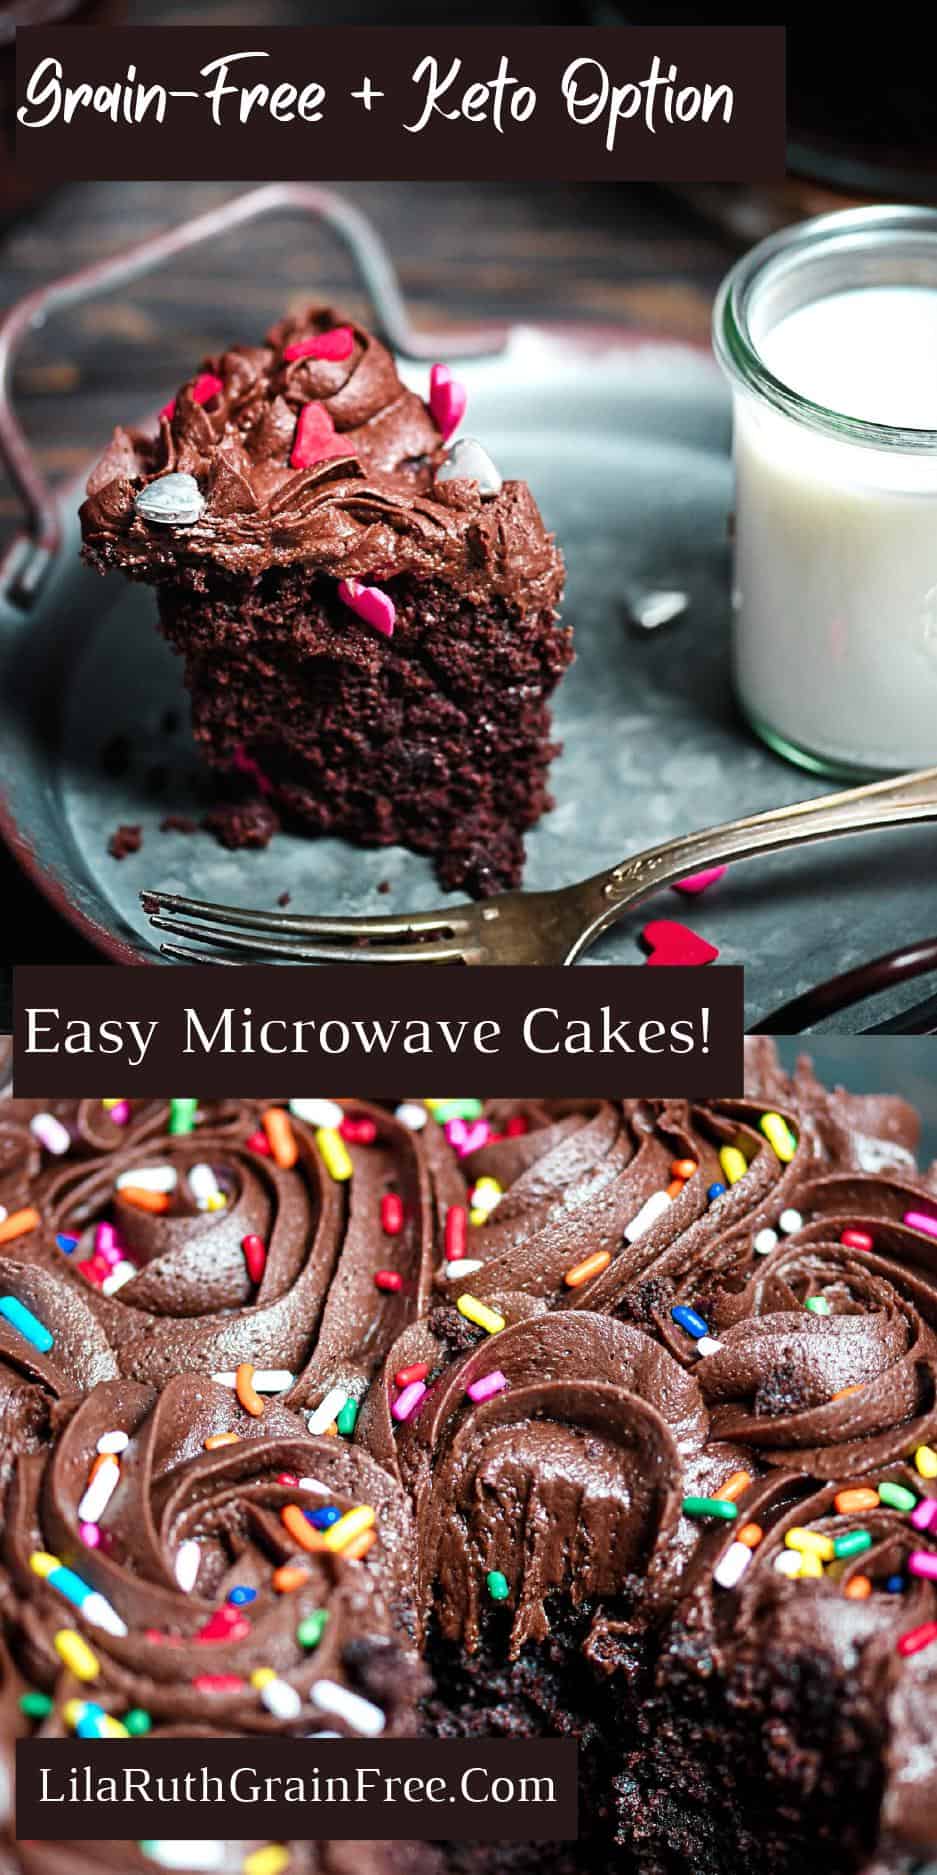 Low-Carb Gluten-Free Chocolate Cake Pin